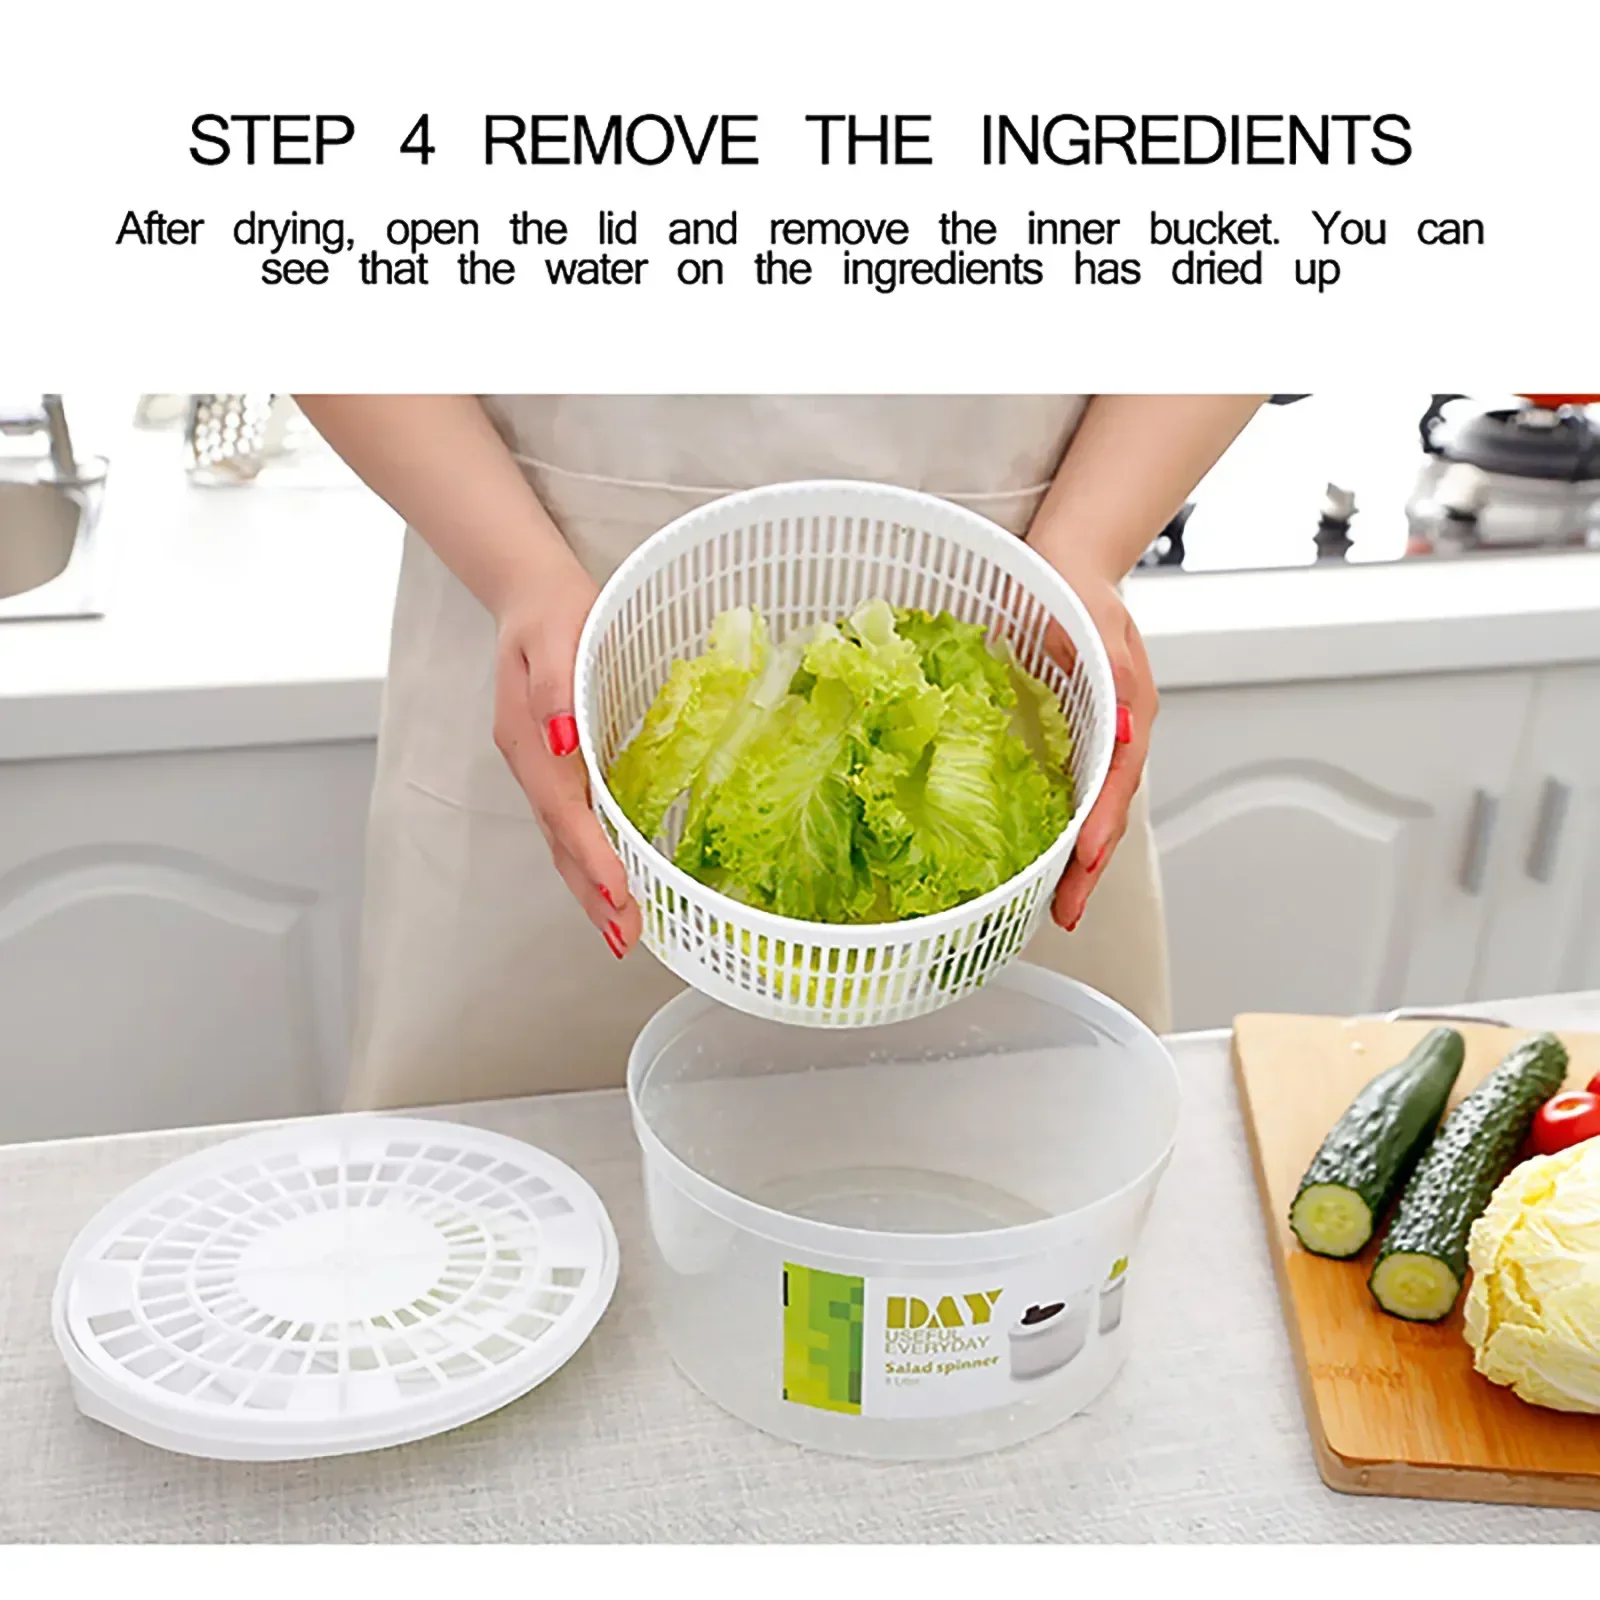 https://ae01.alicdn.com/kf/Sf497e4545d814465a7bb8e15bfd8424e0/Salad-Spinner-Lettuce-Greens-Washer-Dryer-Drain-Crisper-Strainer-for-Washing-Drying-Leafy-Vegetables-Kitchen-Accessories.jpg